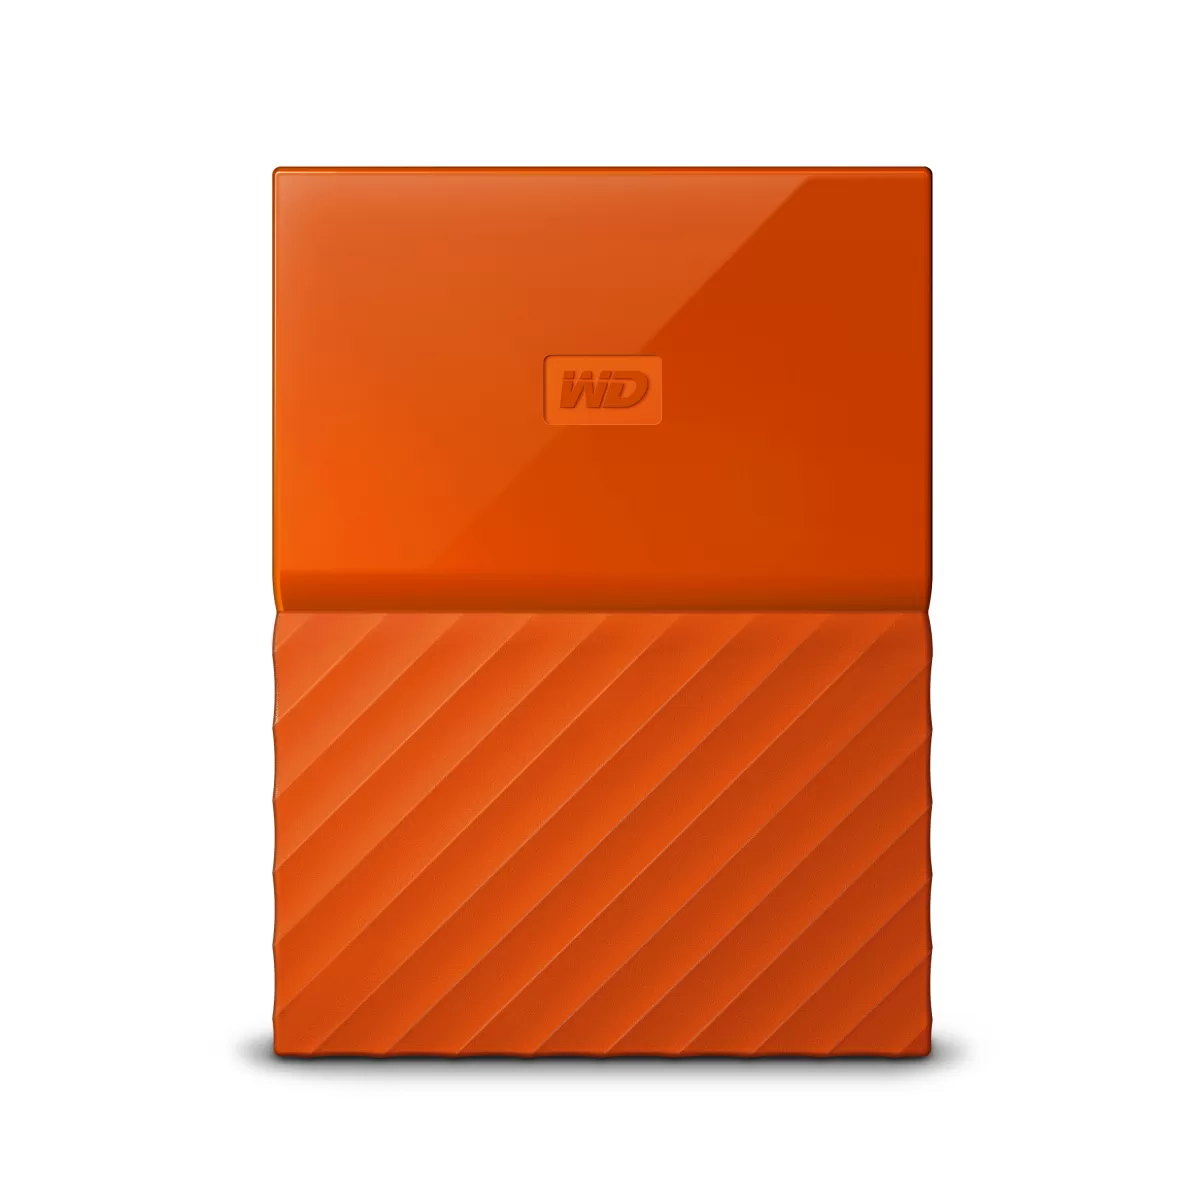 Външен хард диск HDD 2TB USB 3.0 MyPassport (THIN) Orange (3 years warranty) NEW